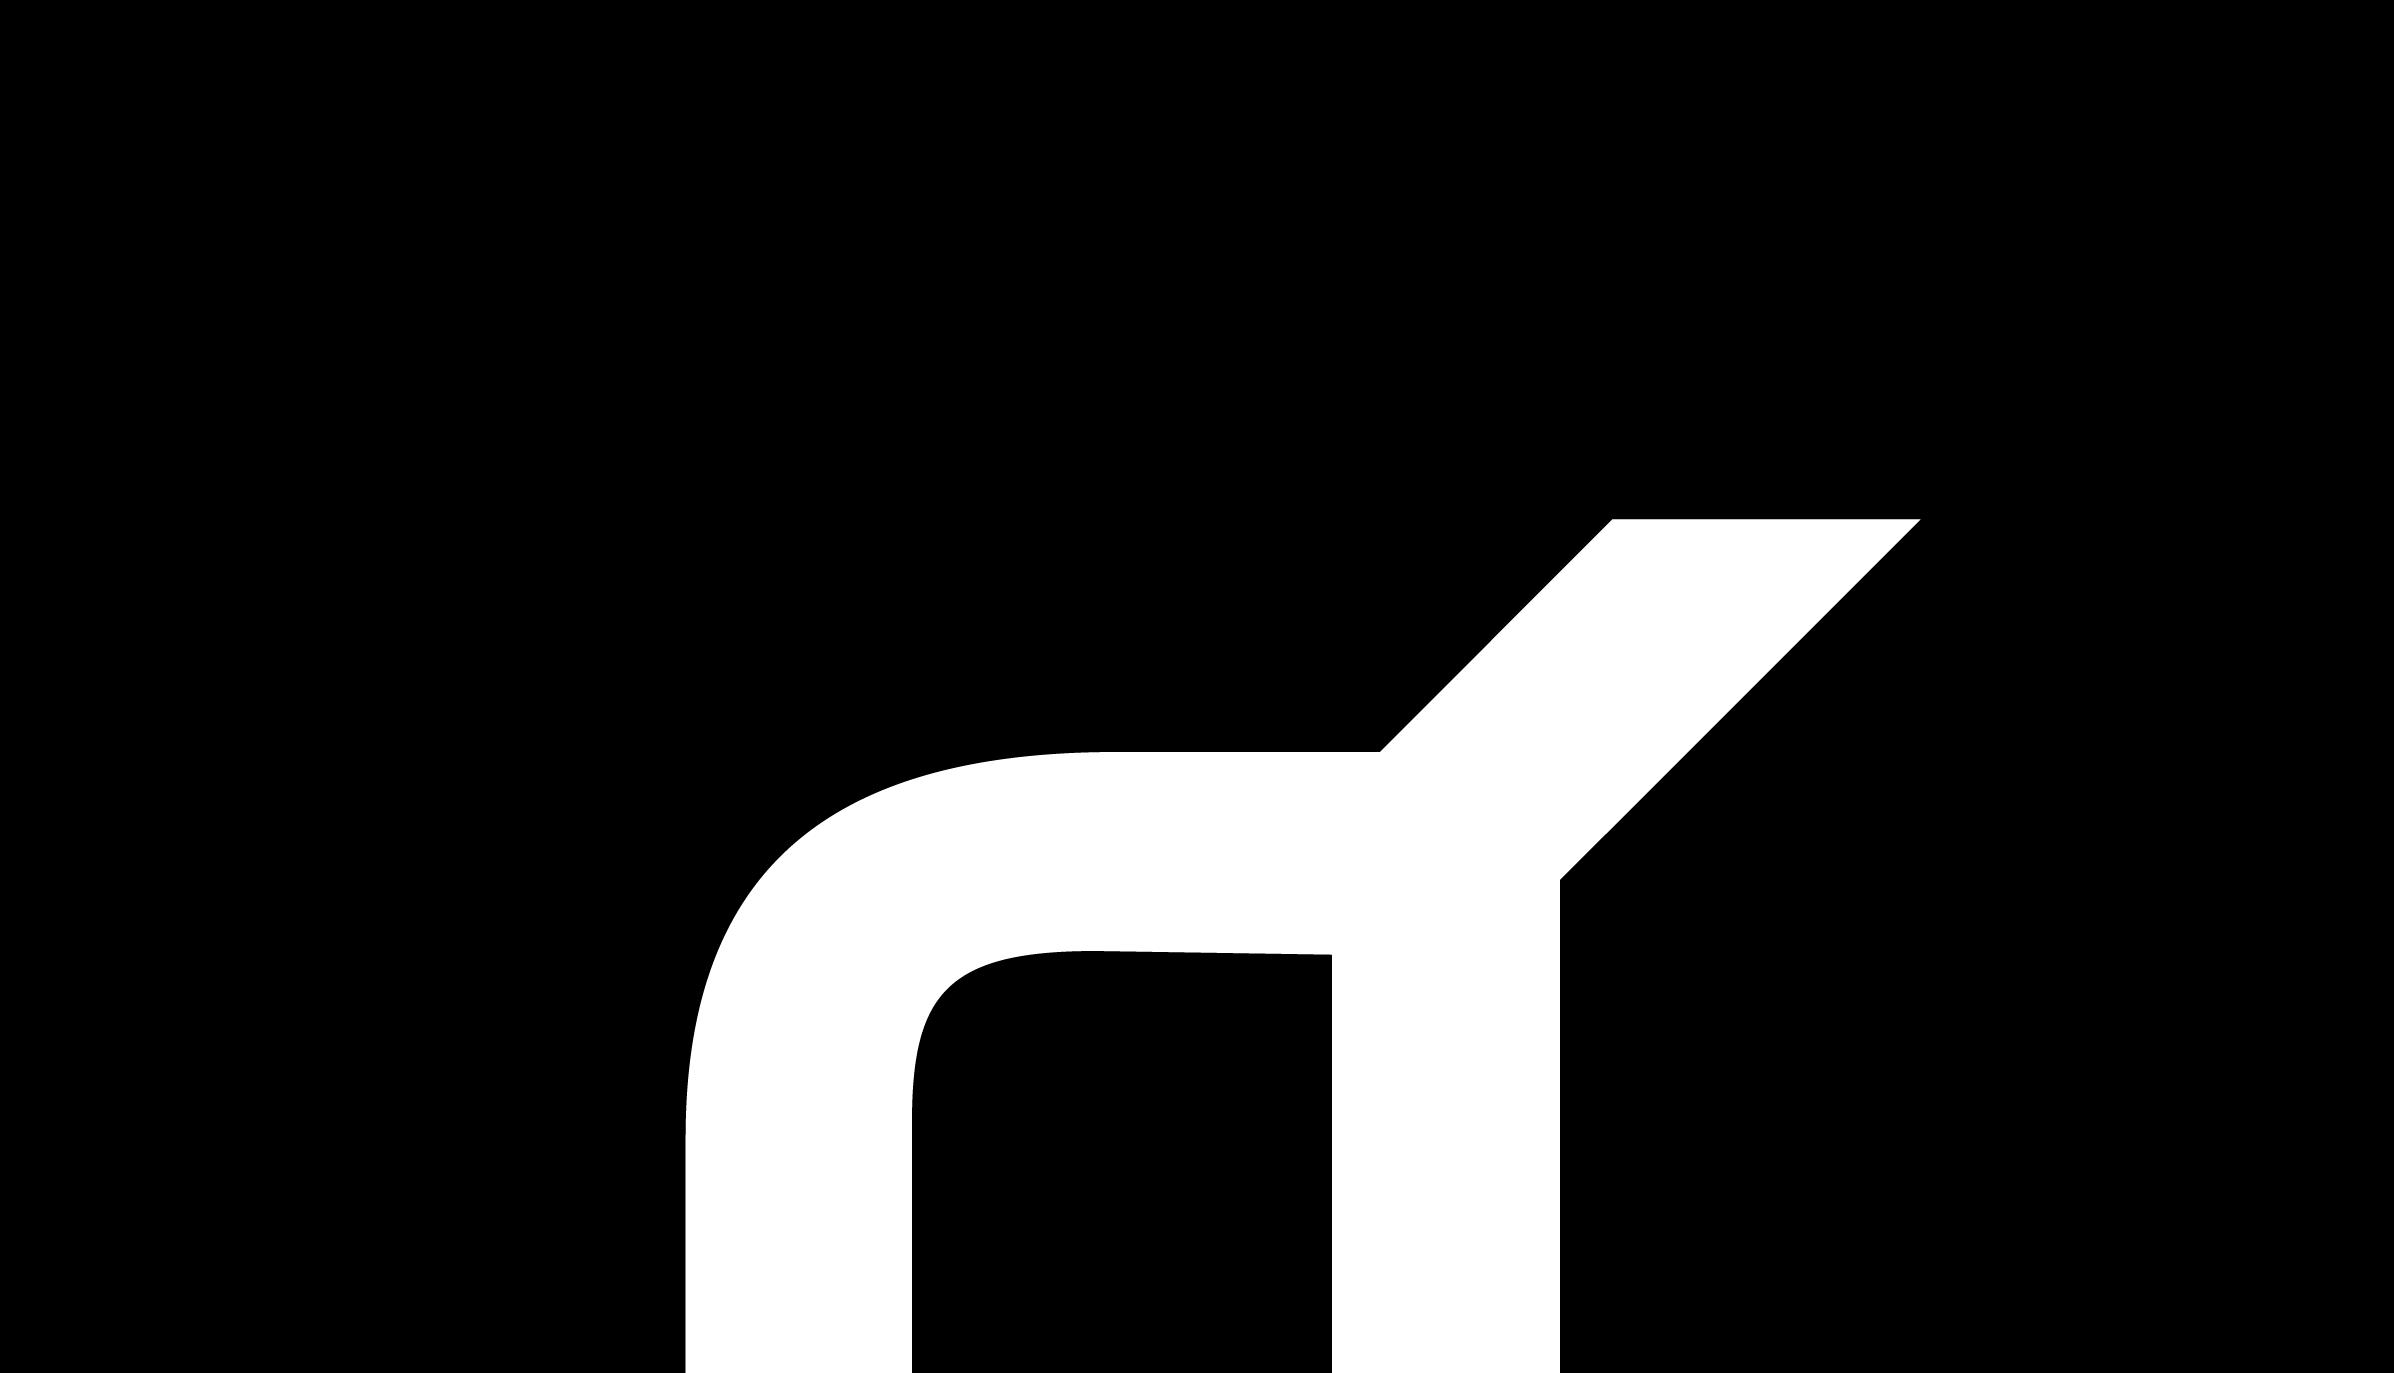 Confluence Architecture Logo Symbol by Ottawa graphic designer idApostle